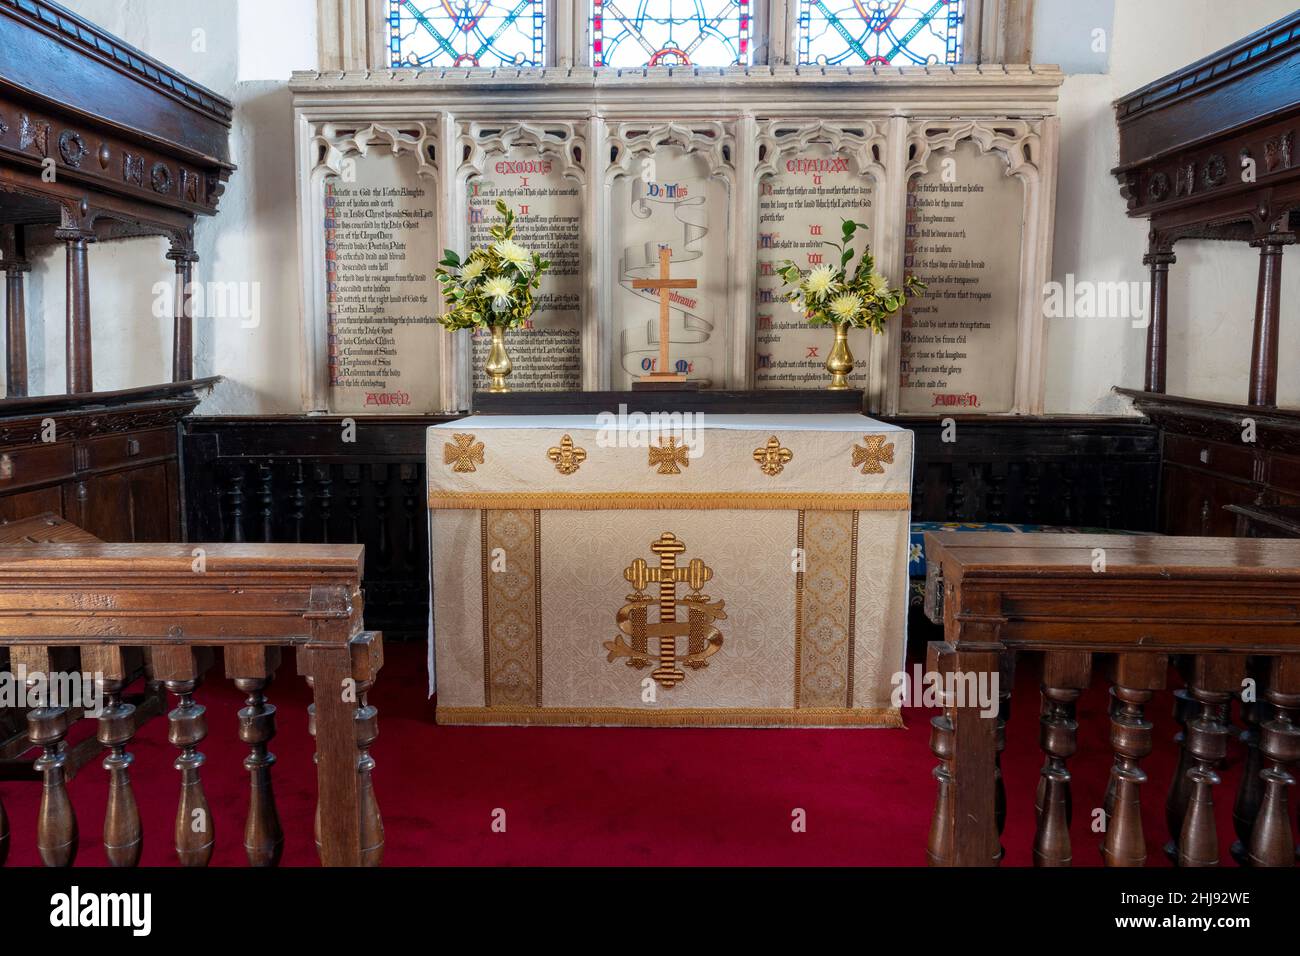 The Altar All Saints Church Easton, Suffolk, UK Stock Photo